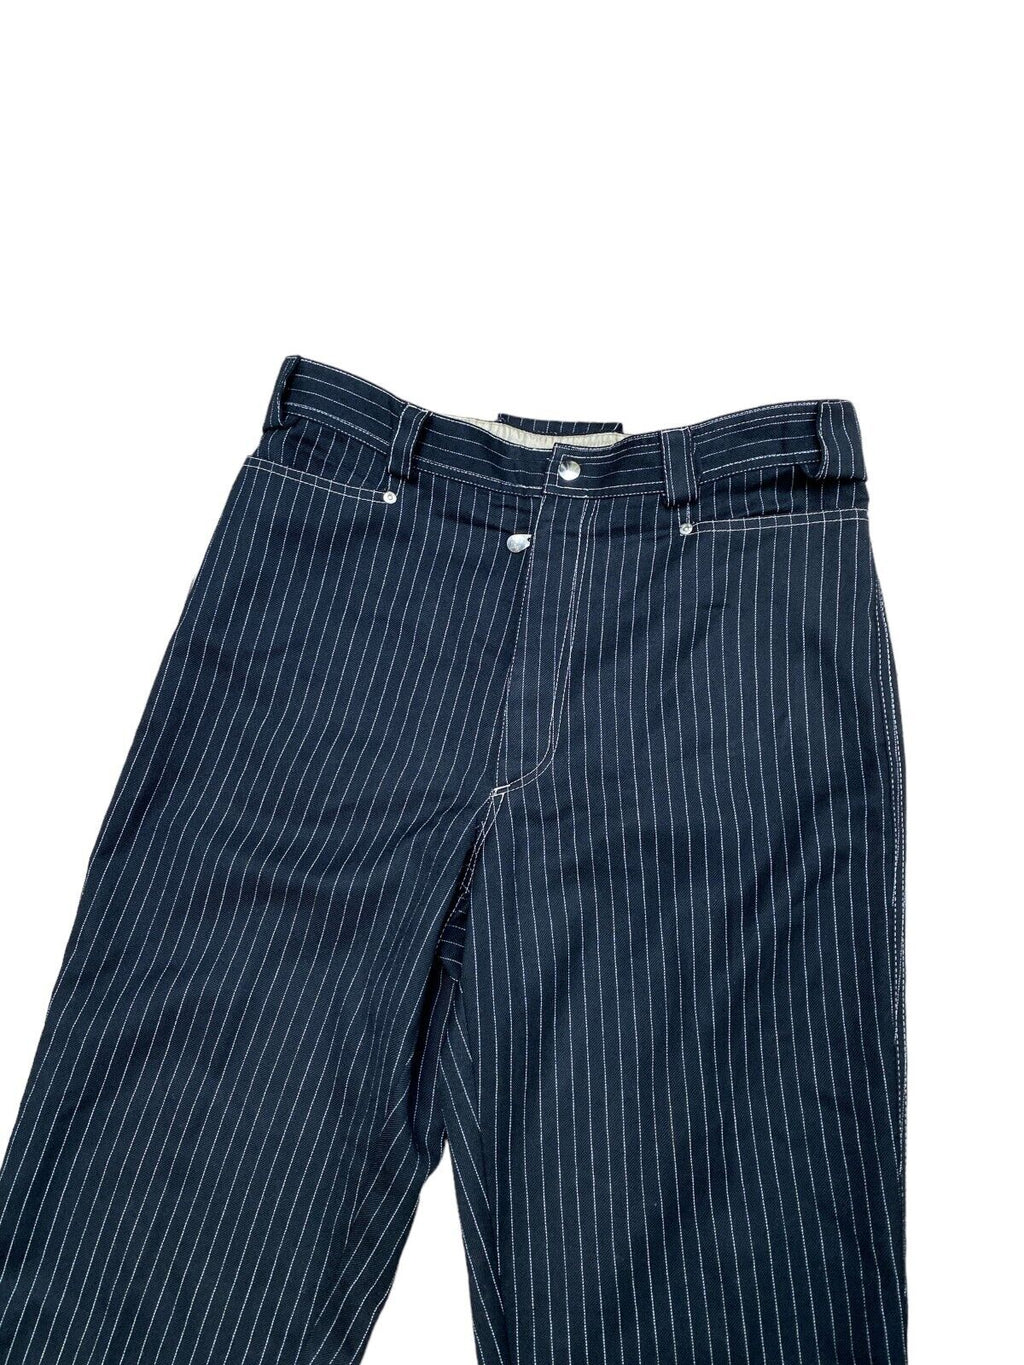 Black Striped Punk Wool Pants  Size L Large / US 32